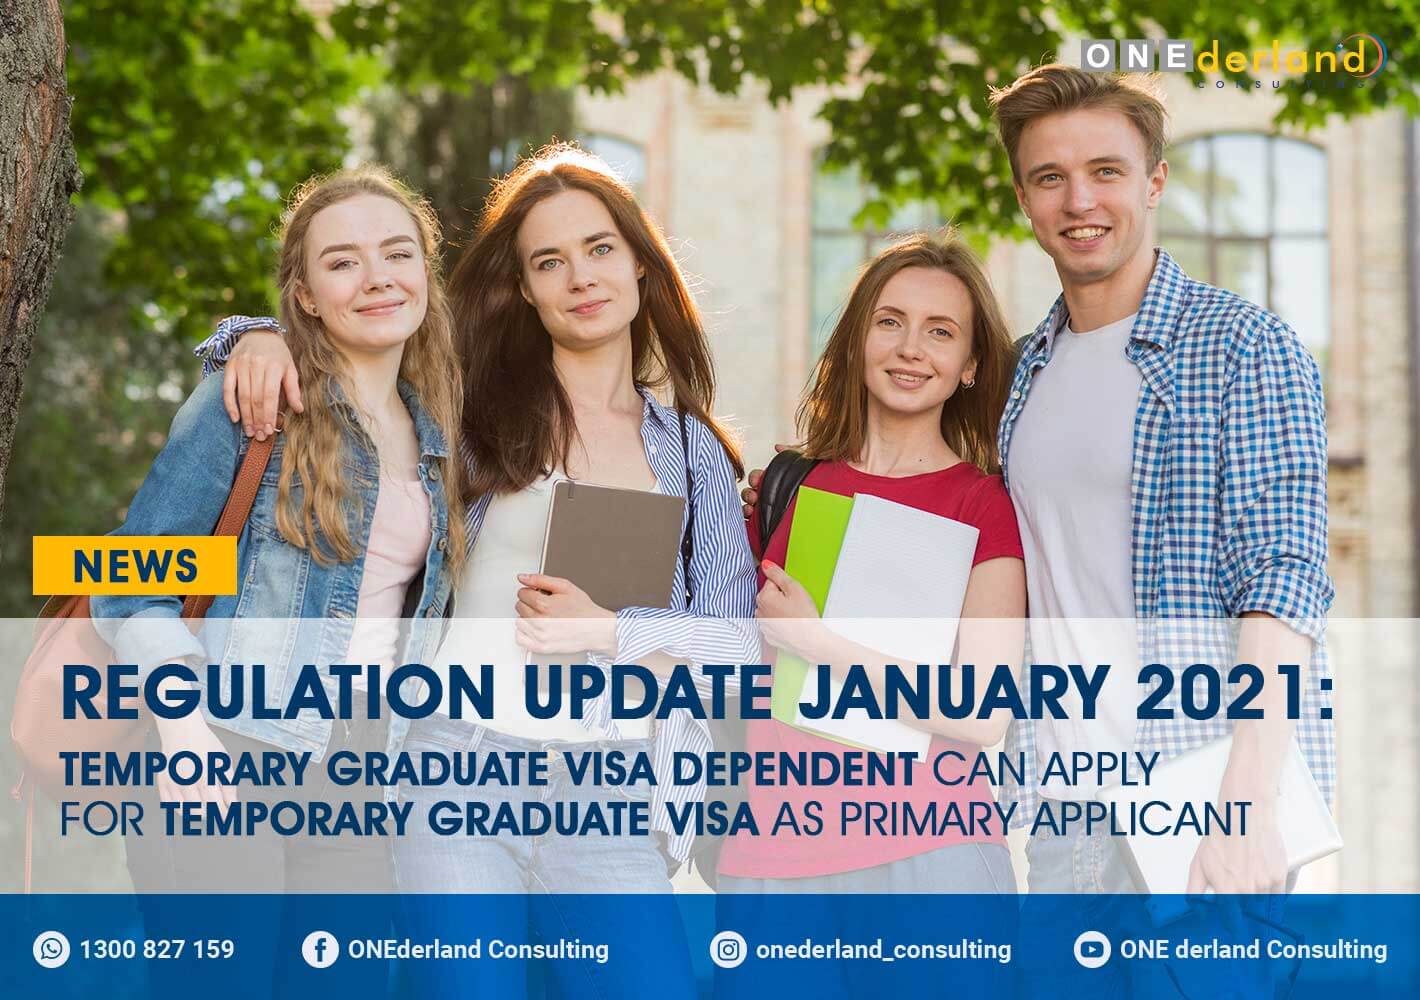 No Exclusion For Temporary Graduate Visa Application